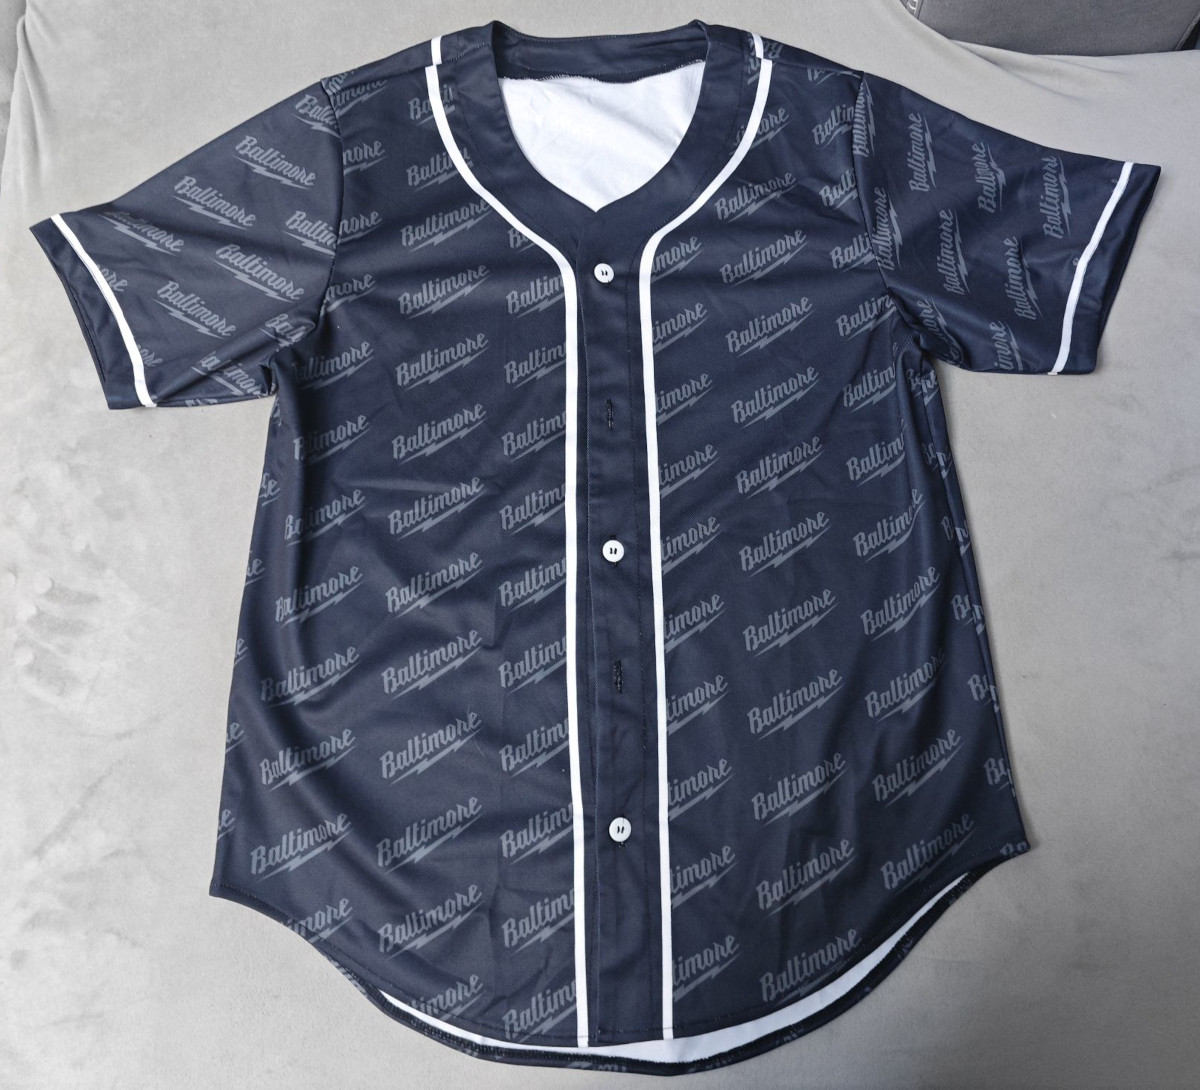 custom men's baseball jersey shirt printing no minimum